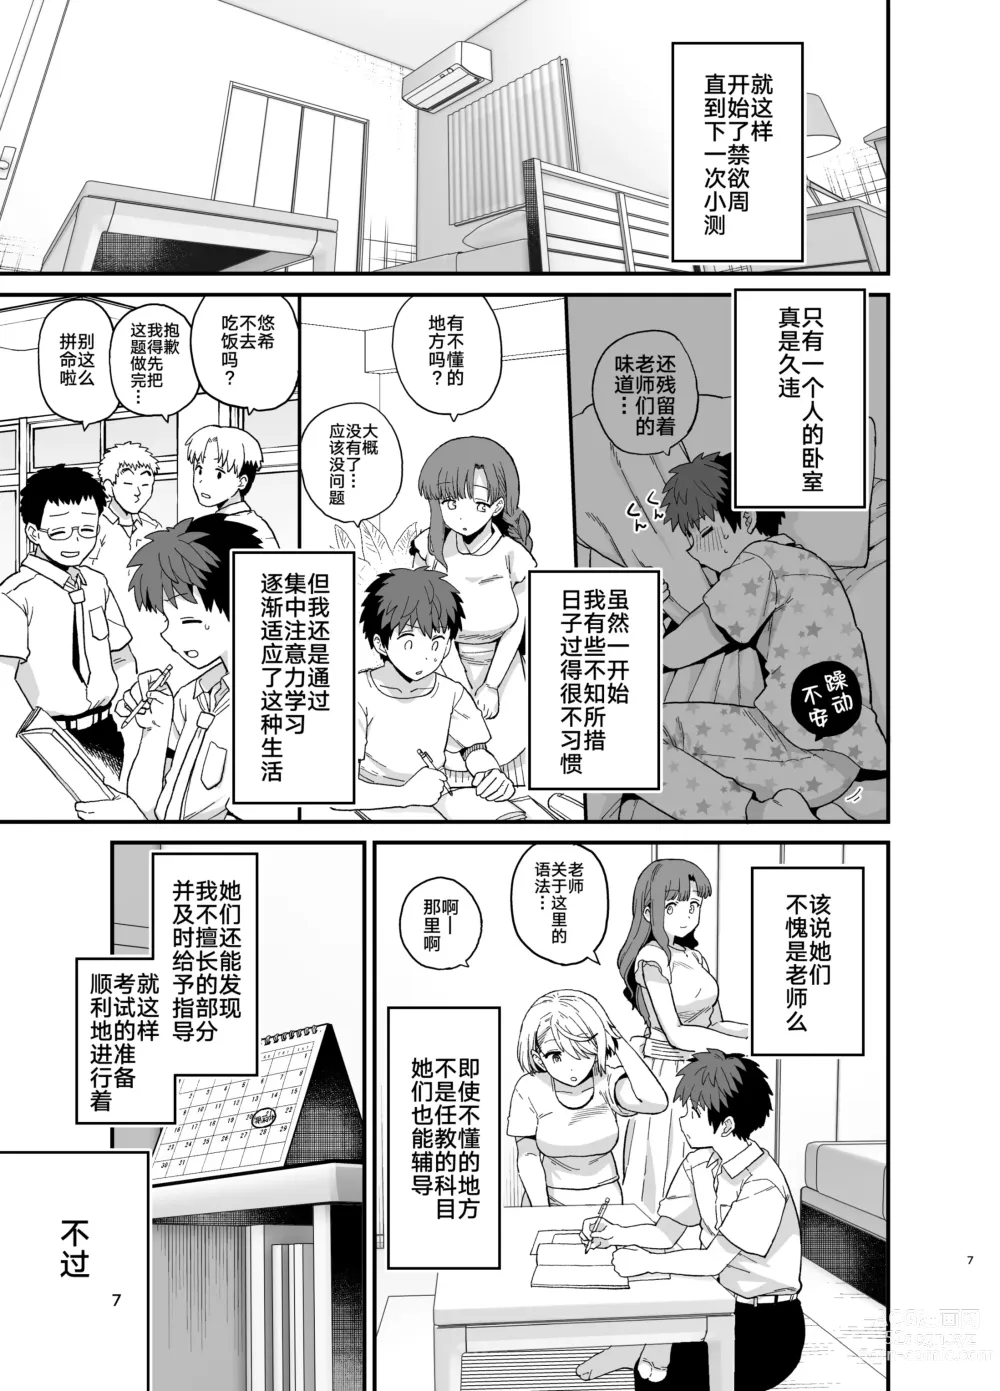 Page 9 of doujinshi Sentaku Kyouka Nijigenme